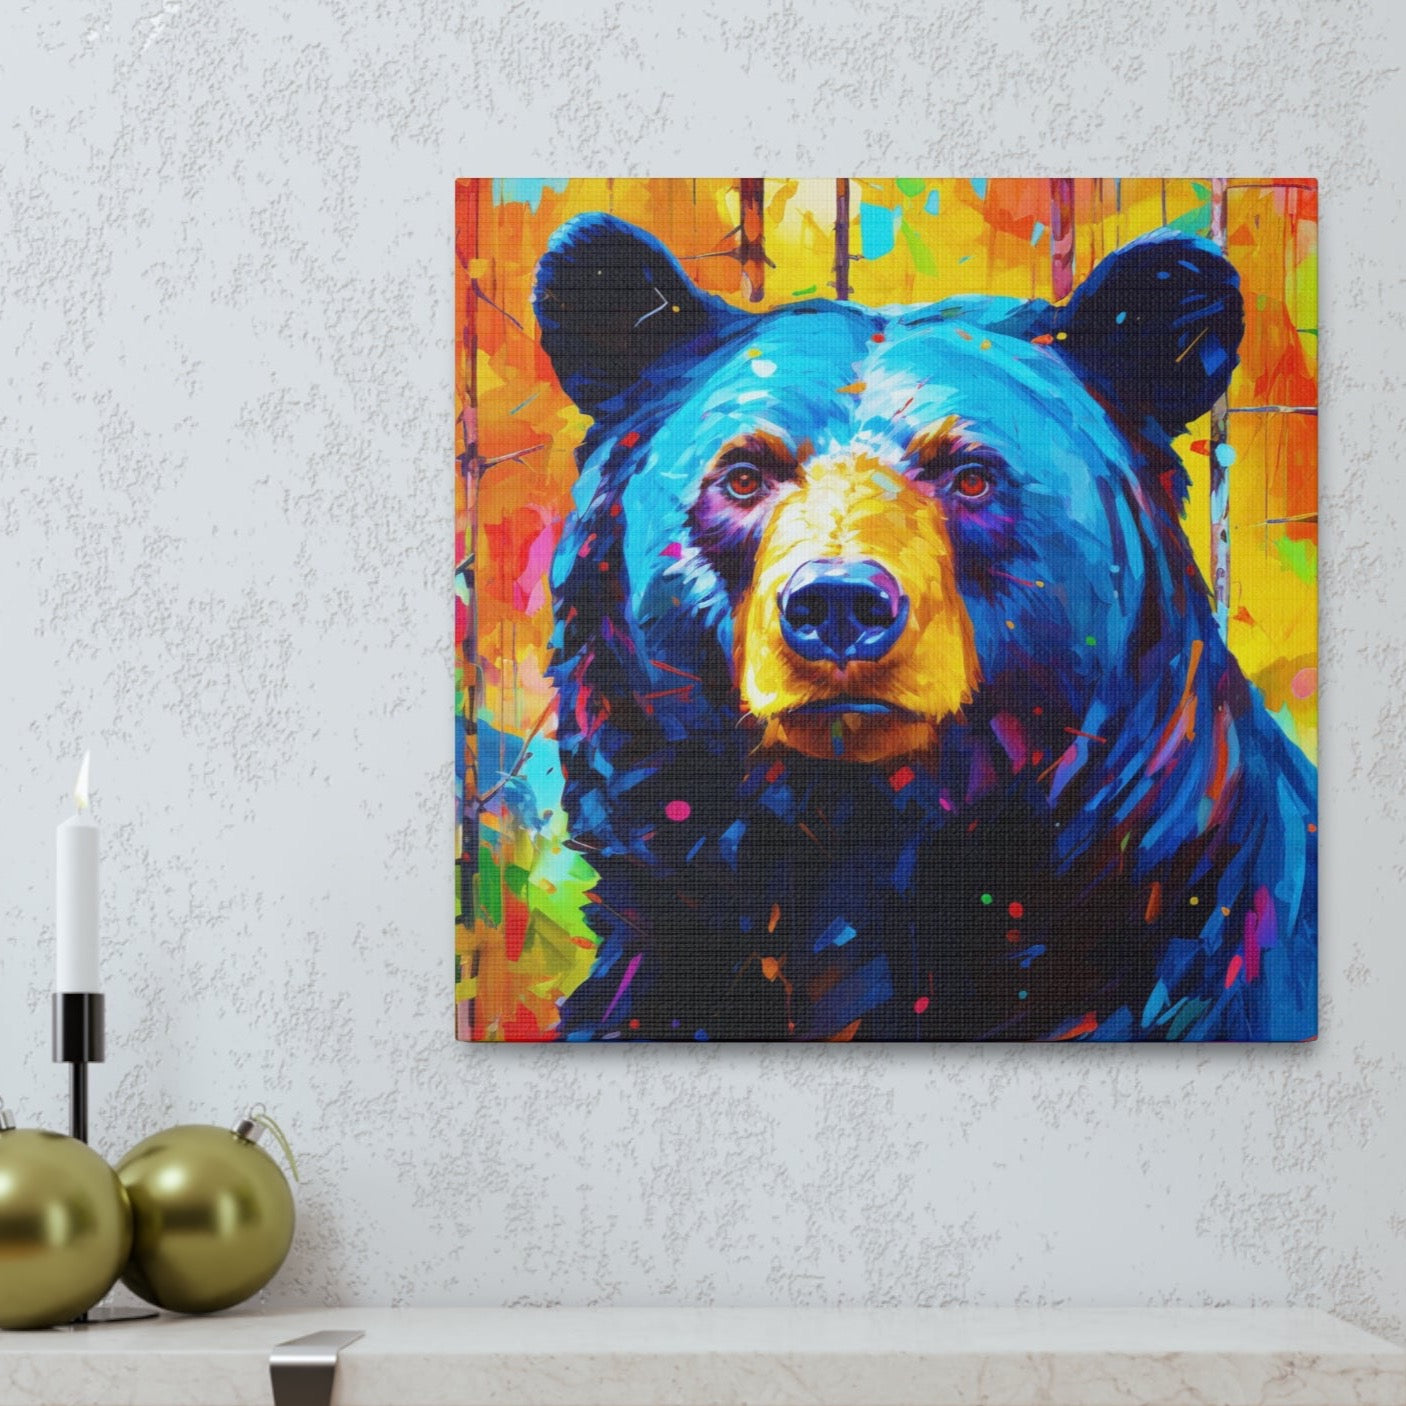 black bear decor, black bear indoor decor